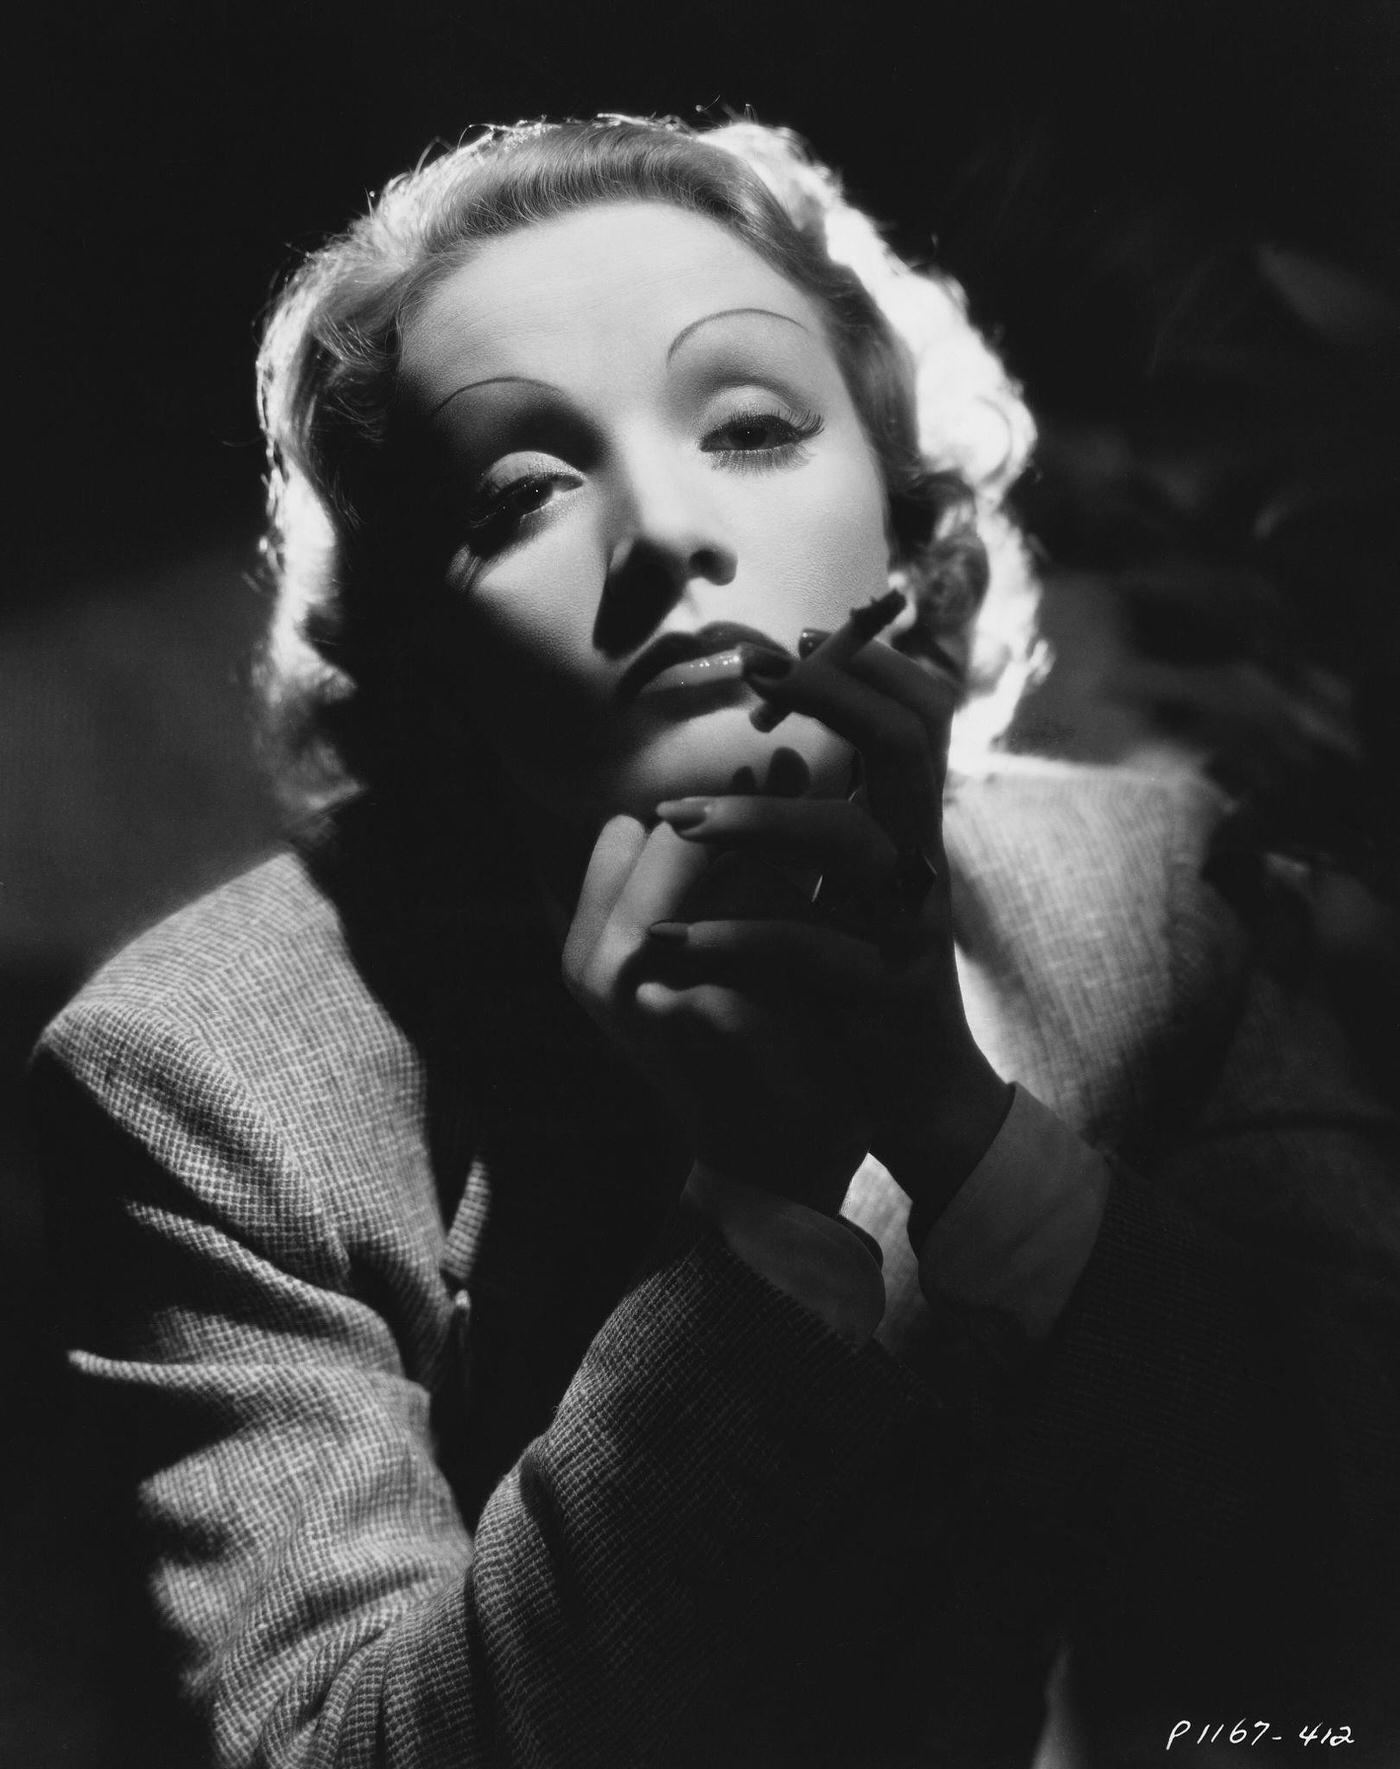 A photograph of actress Marlene Dietrich smoking taken in 1935.